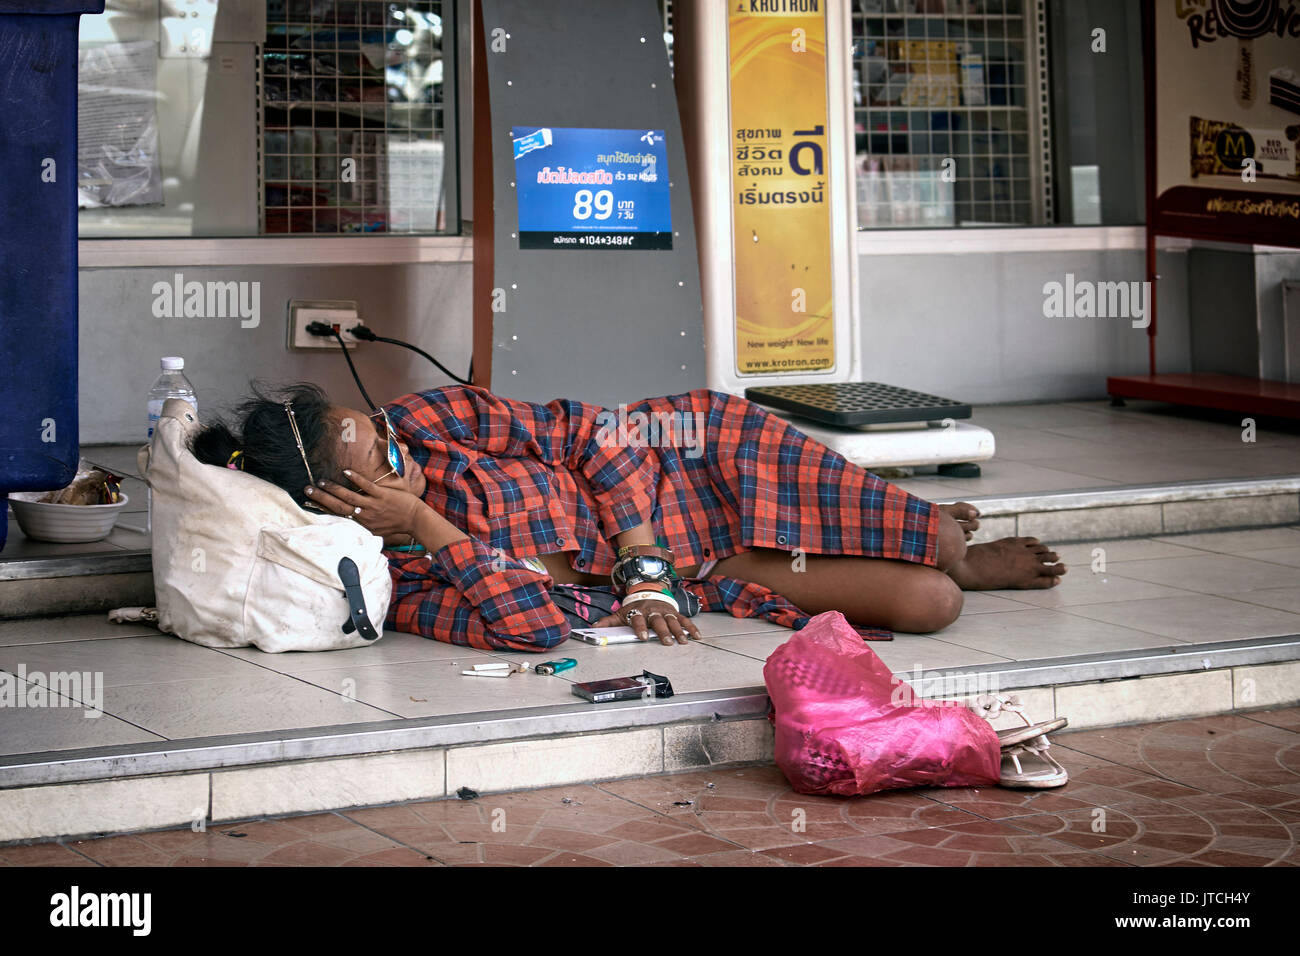 Homeless woman asleep on the street. Thailand Southeast Asia Stock Photo